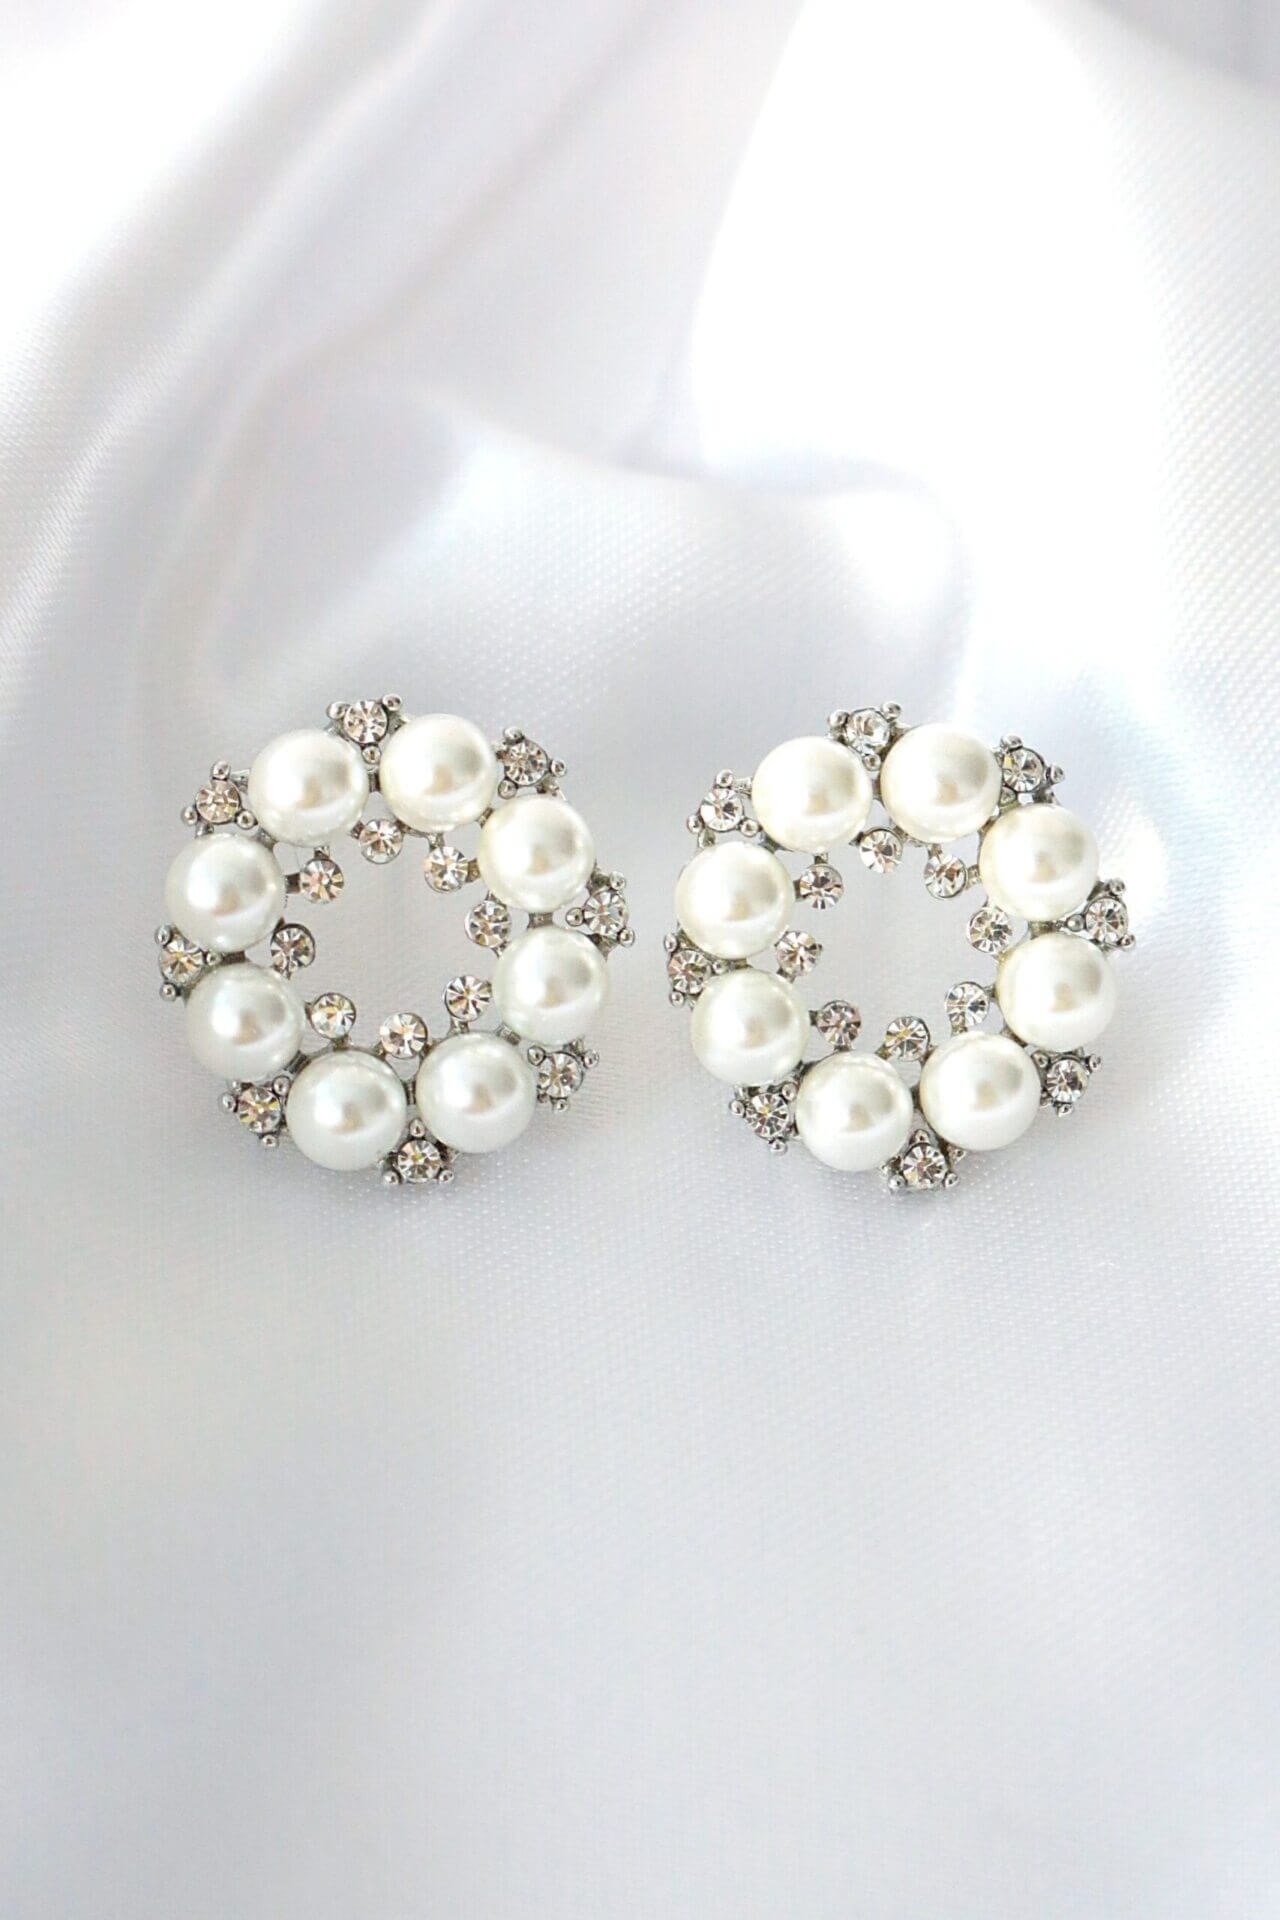 18K White gold pearl stud earrings